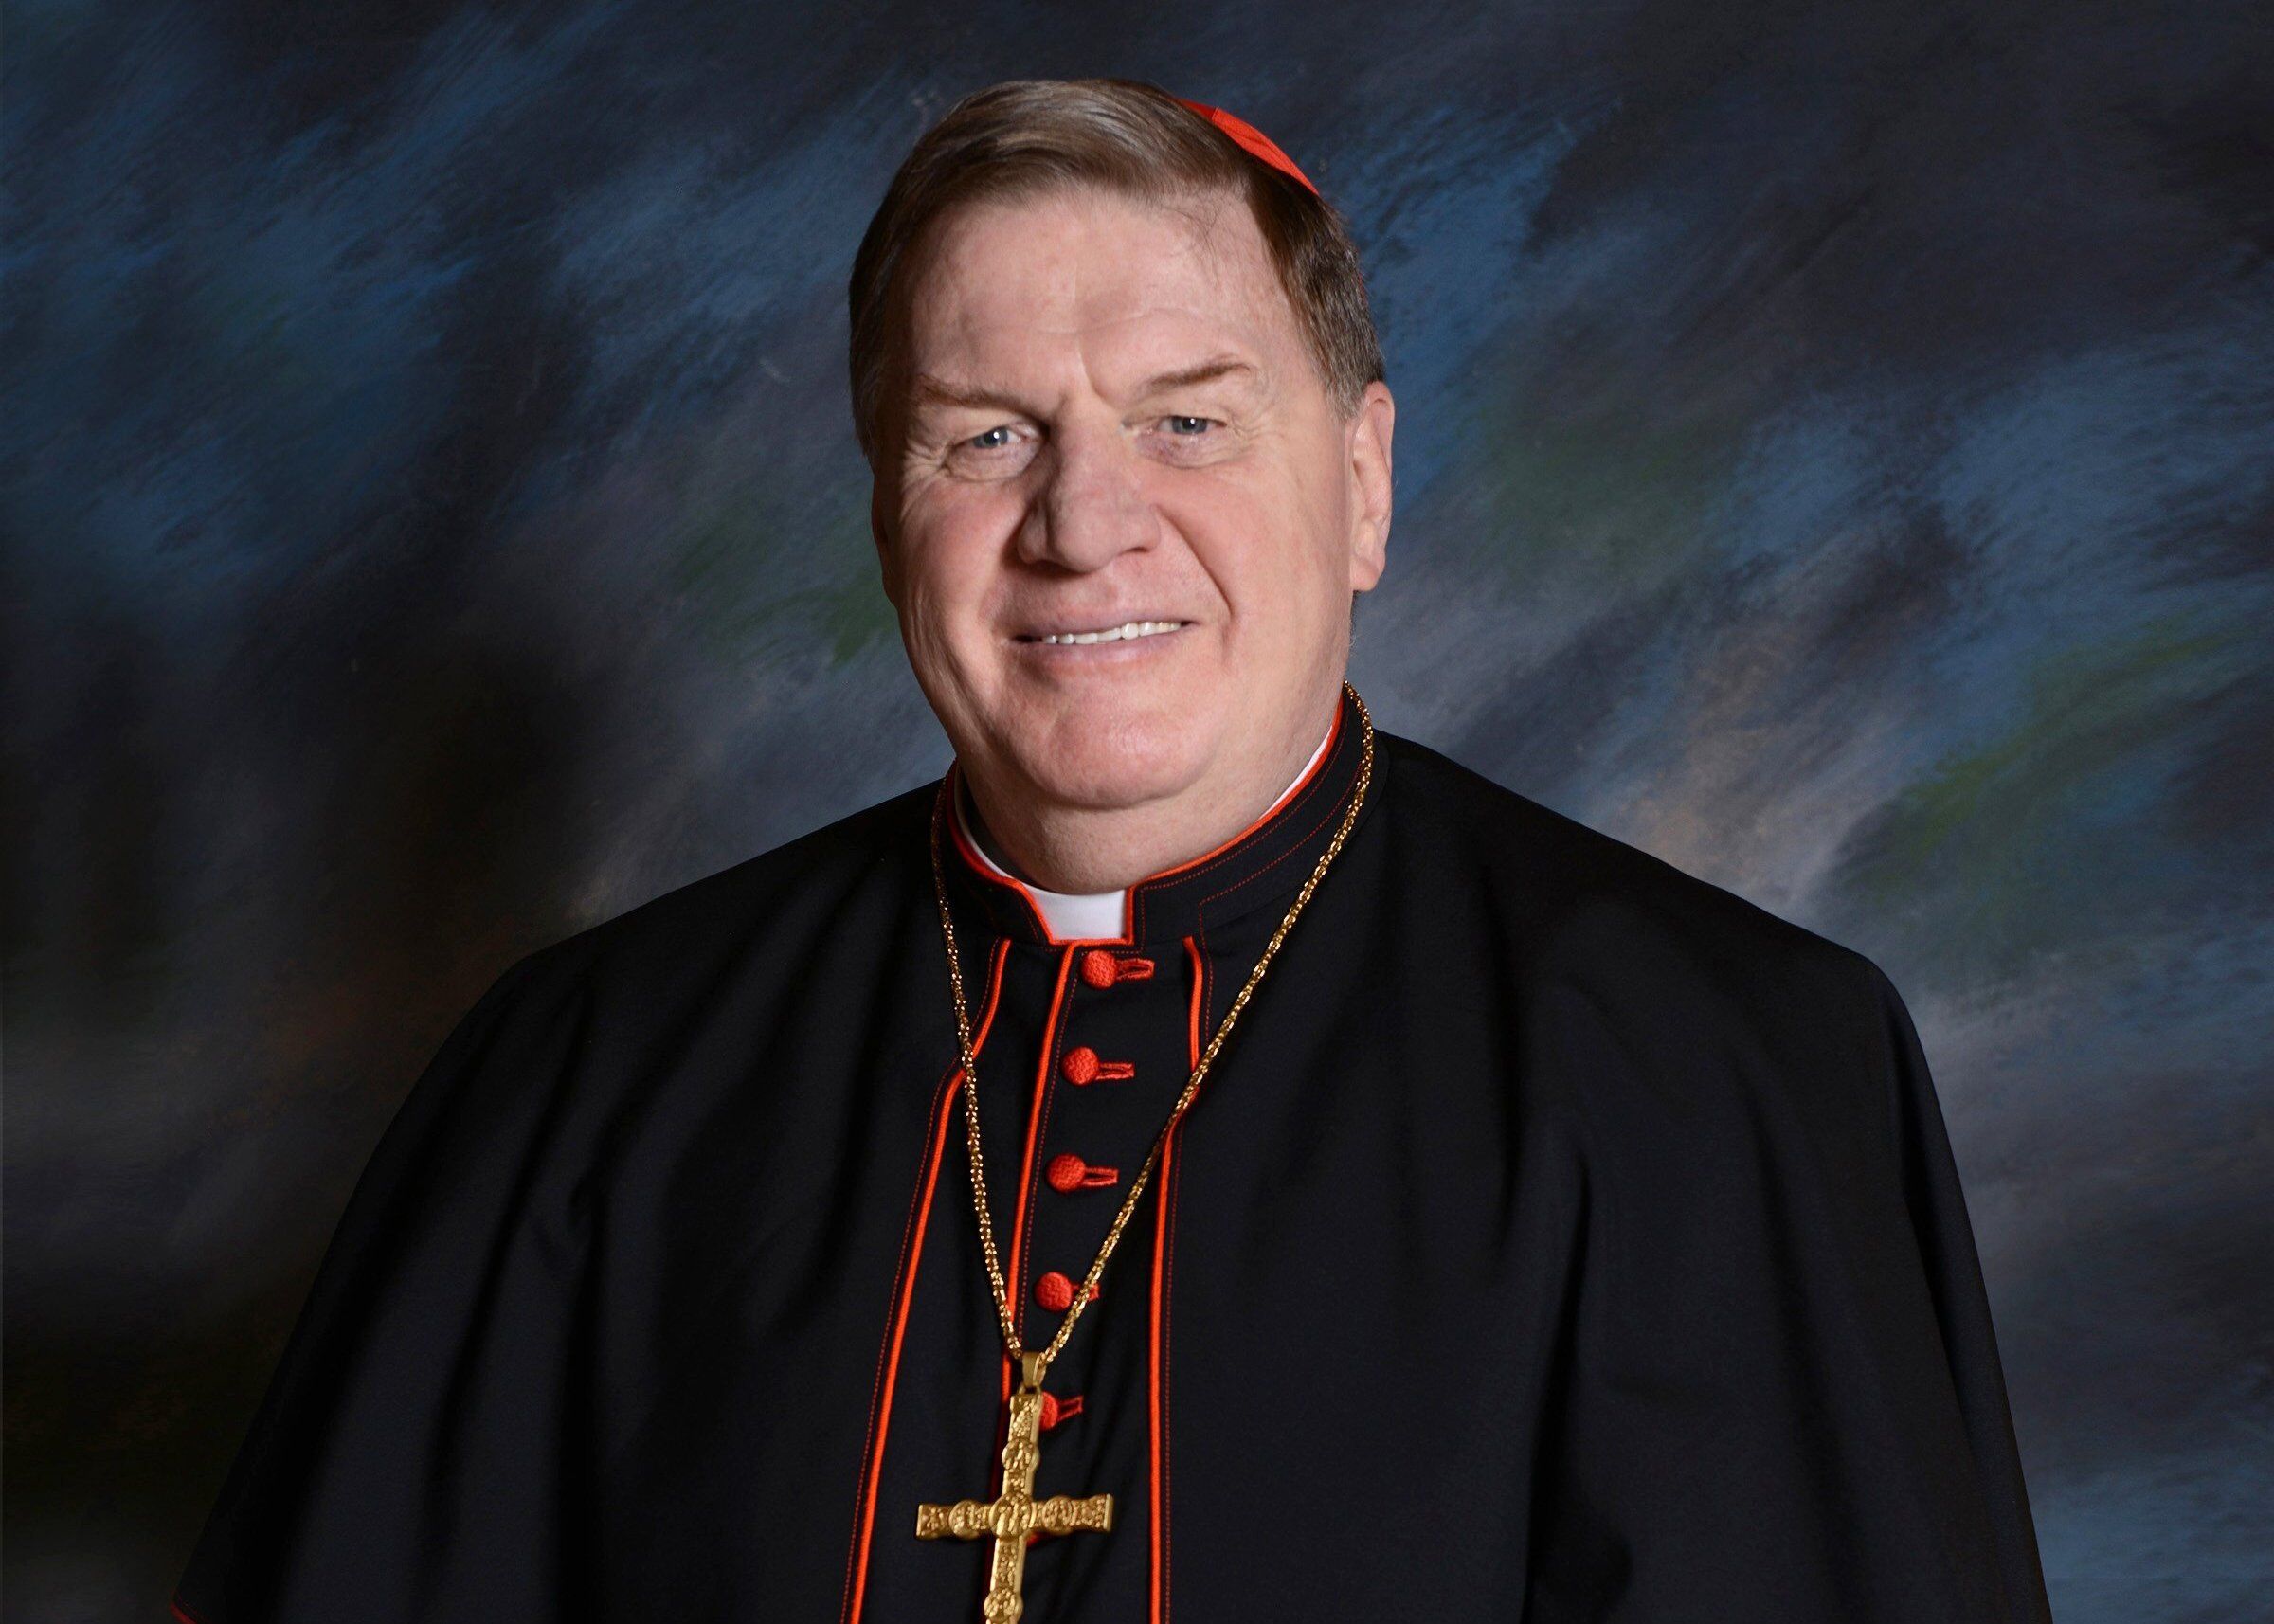 Cardinal Joseph W. Tobin